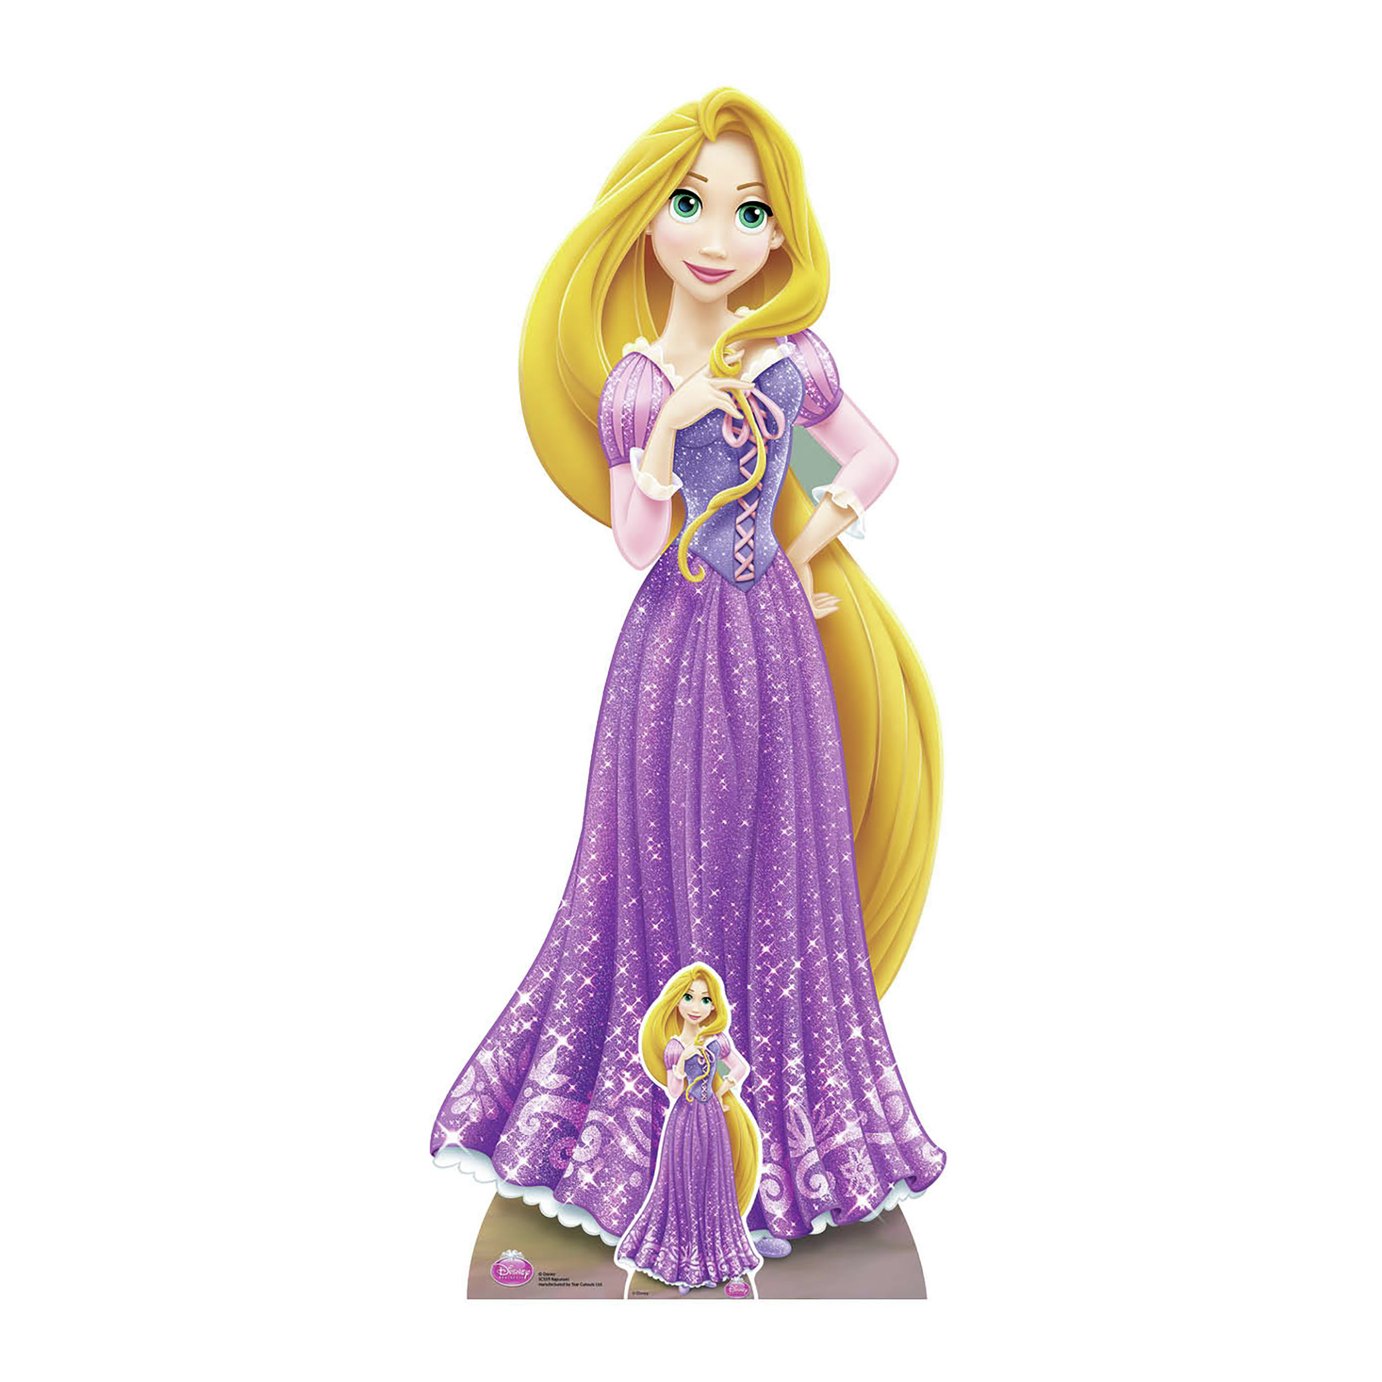 Star Cutout Disney Princess Rapunzel Cardboard Cutout  